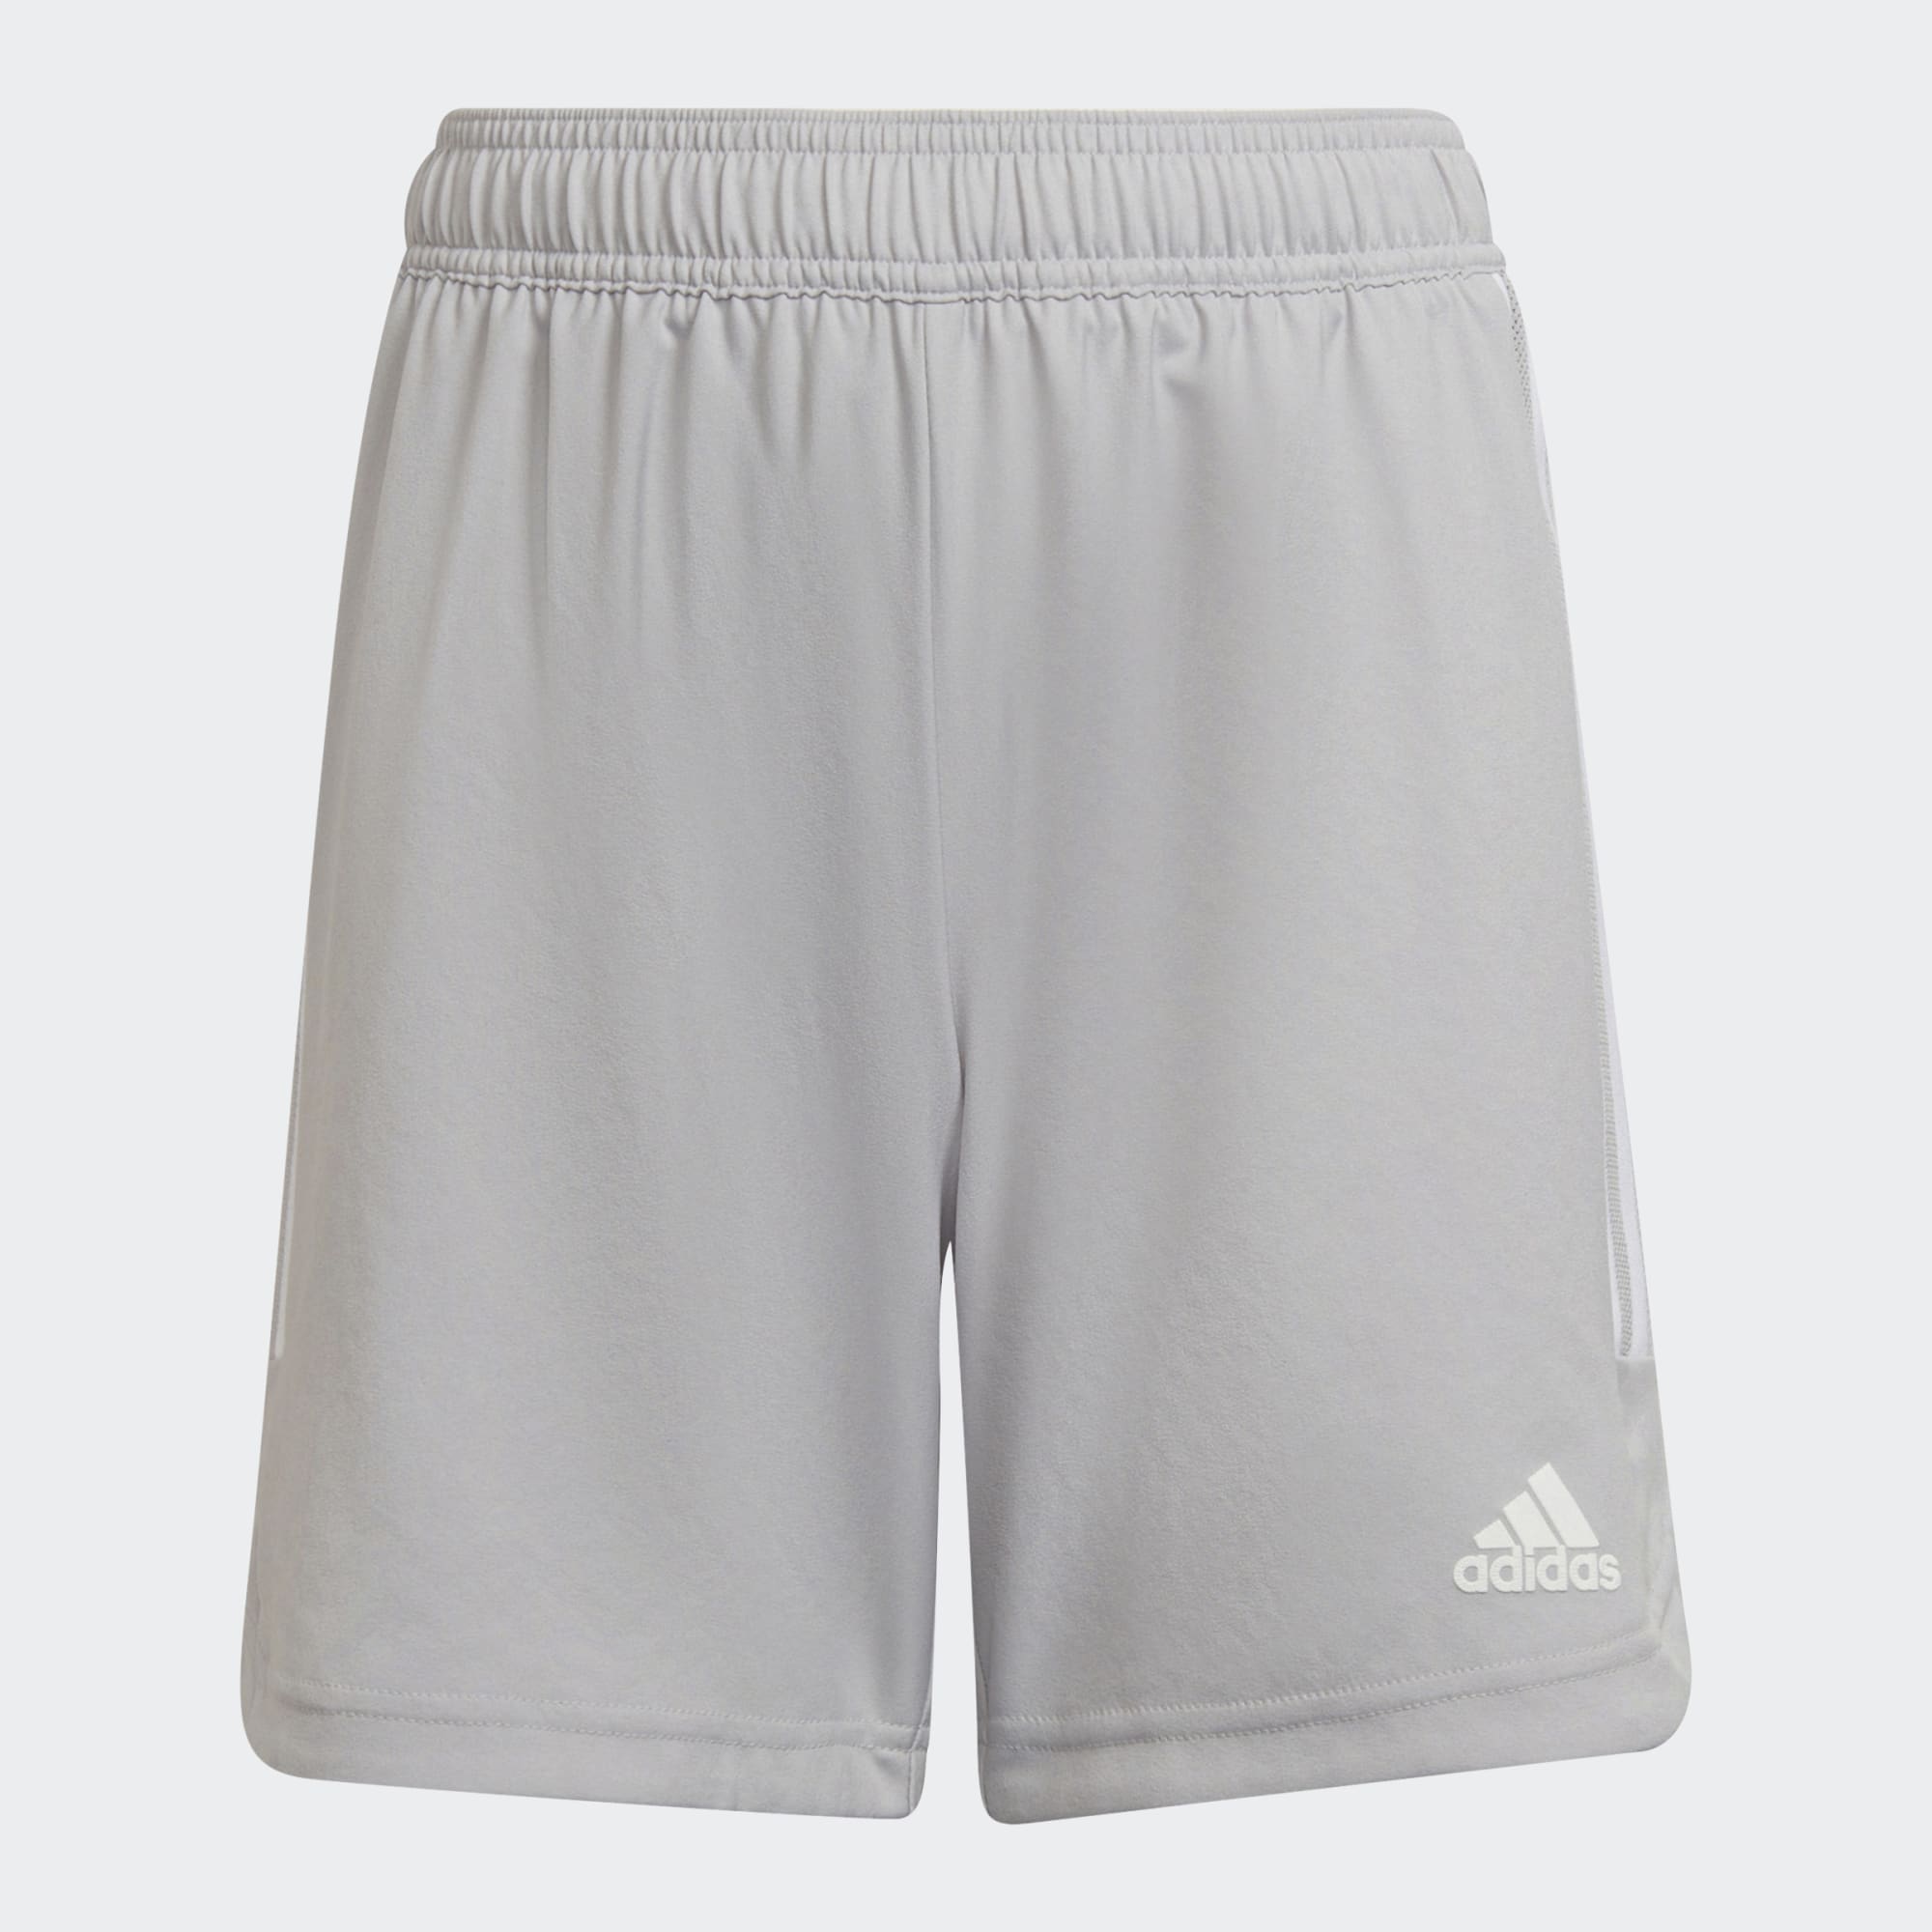 stefanssoccer.com:adidas Youth Condivo Shorts - Grey